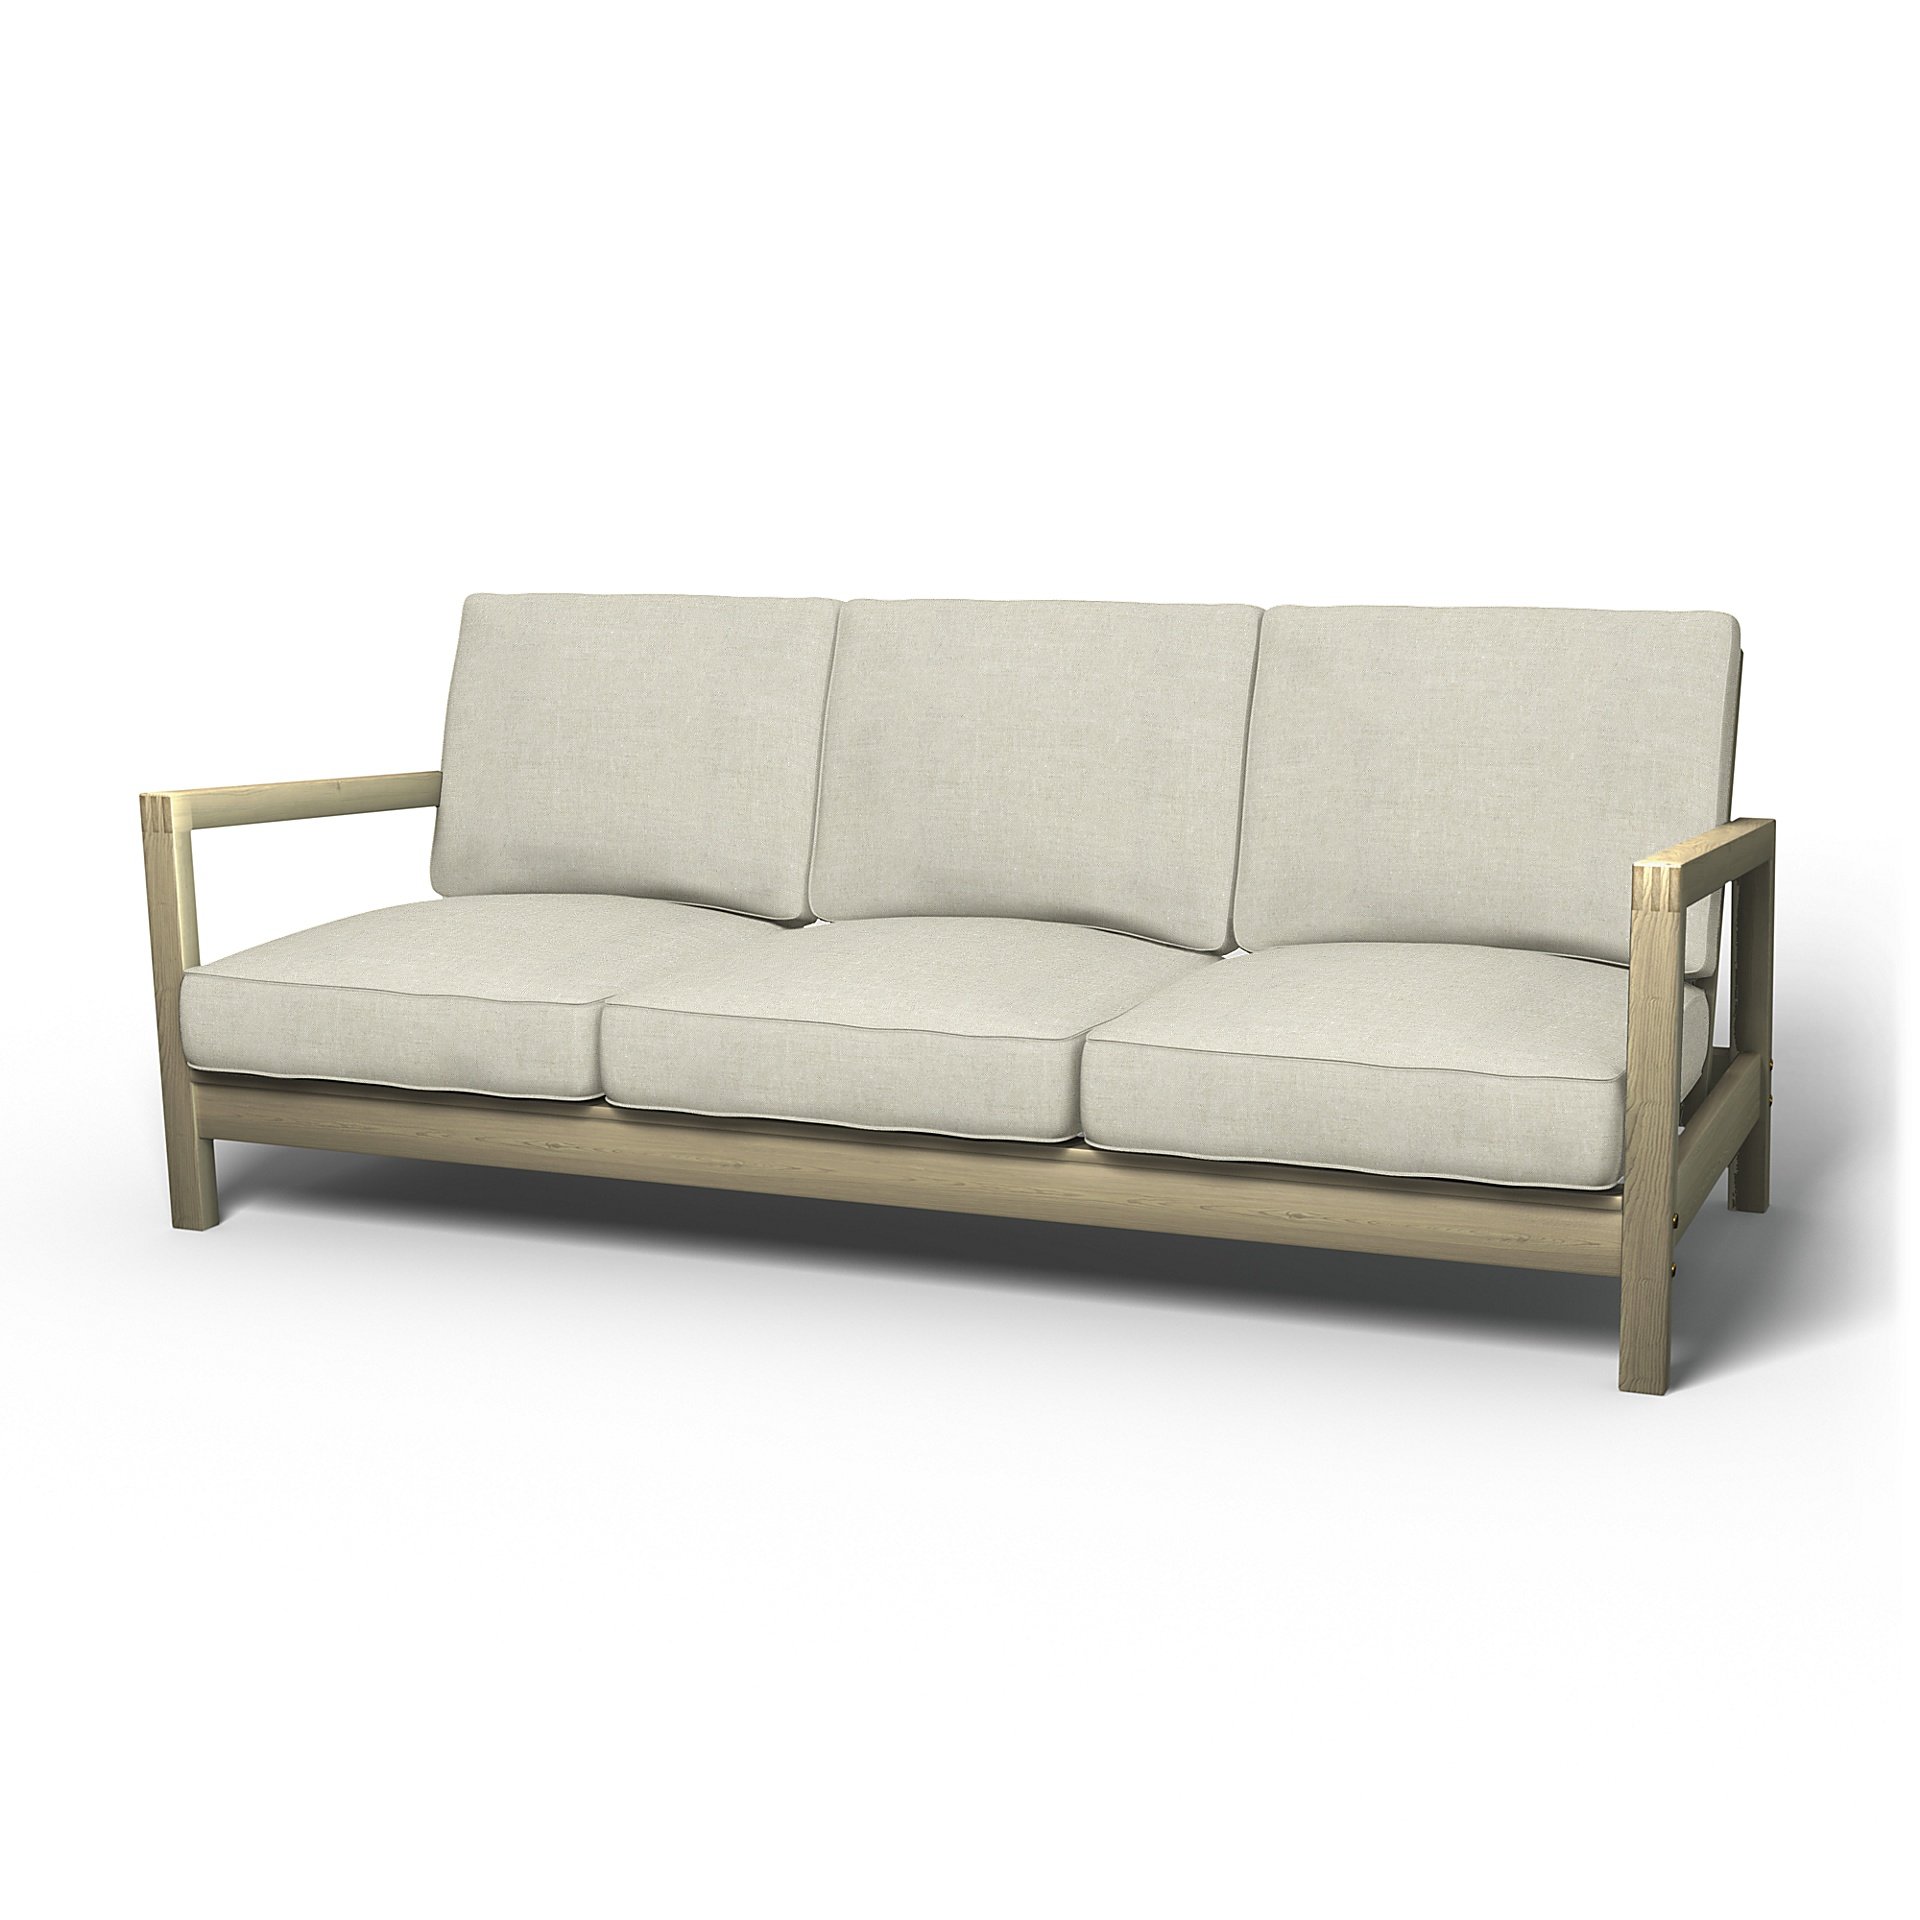 IKEA - Lillberg 3 Seater Sofa Cover, Natural, Linen - Bemz